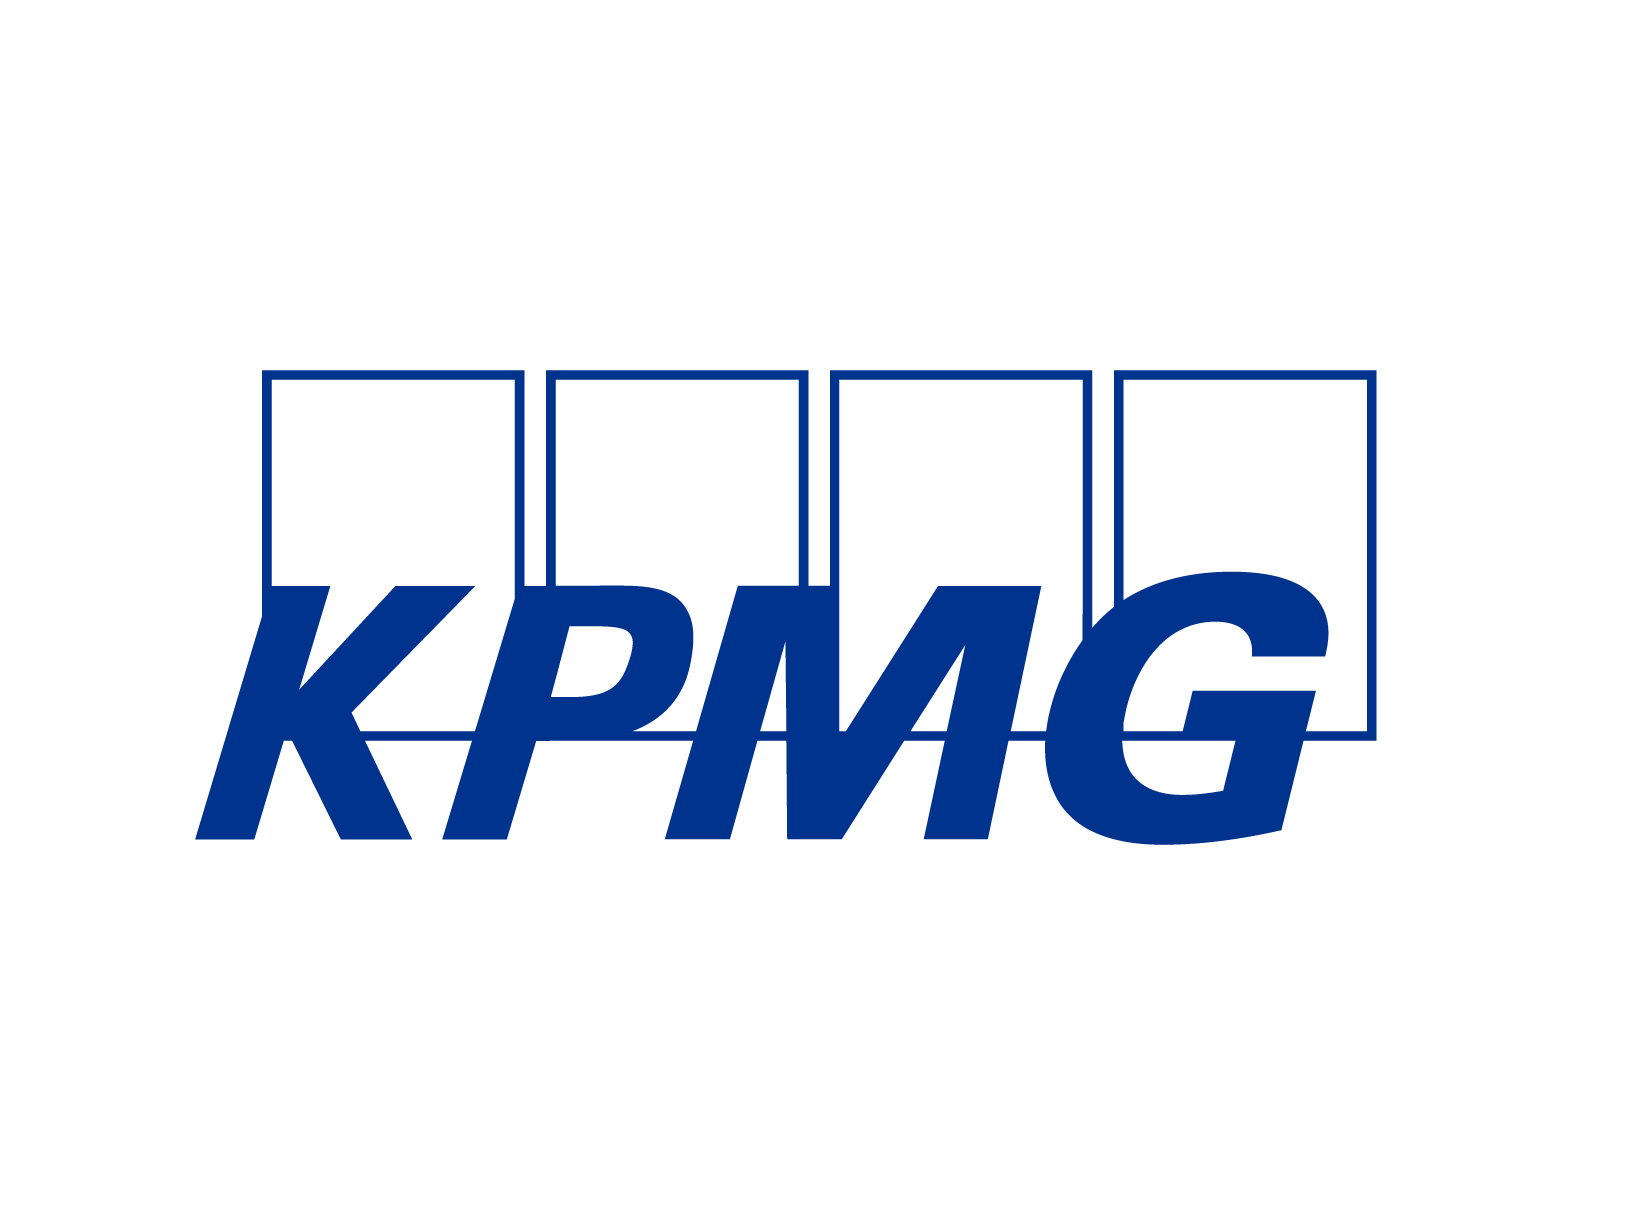 KPMG Blue logo web